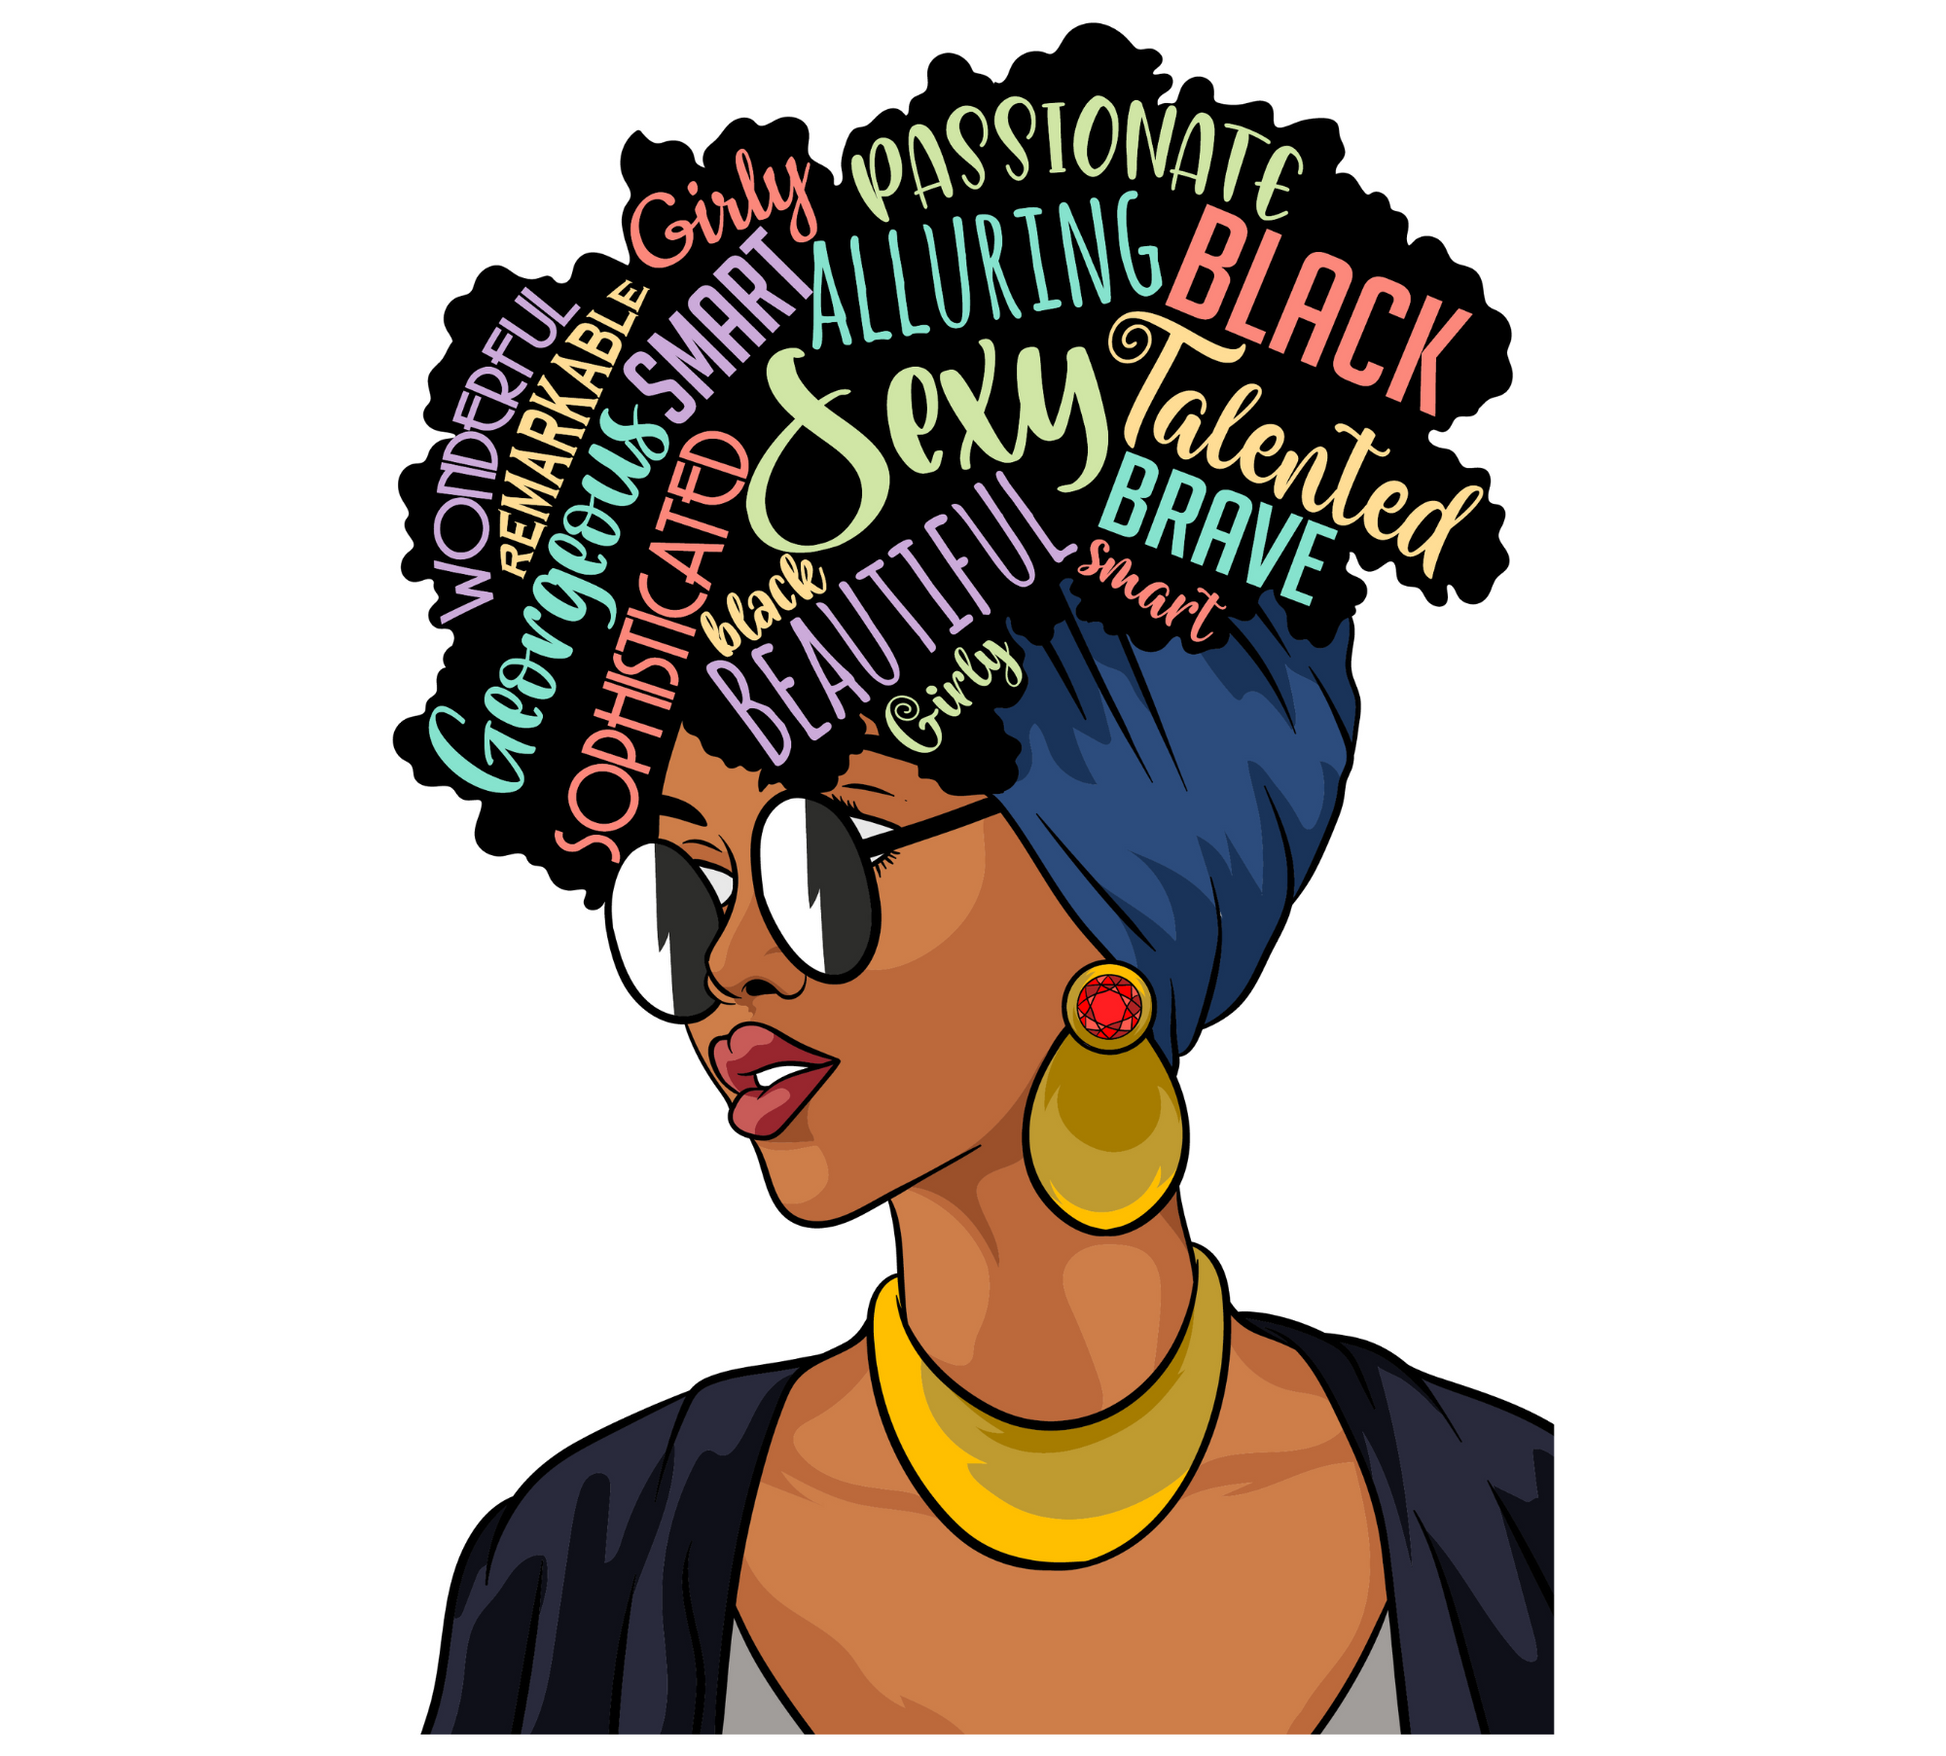 20 Oz Skinny Tumbler Design, Colorful African Woman, Black Woman